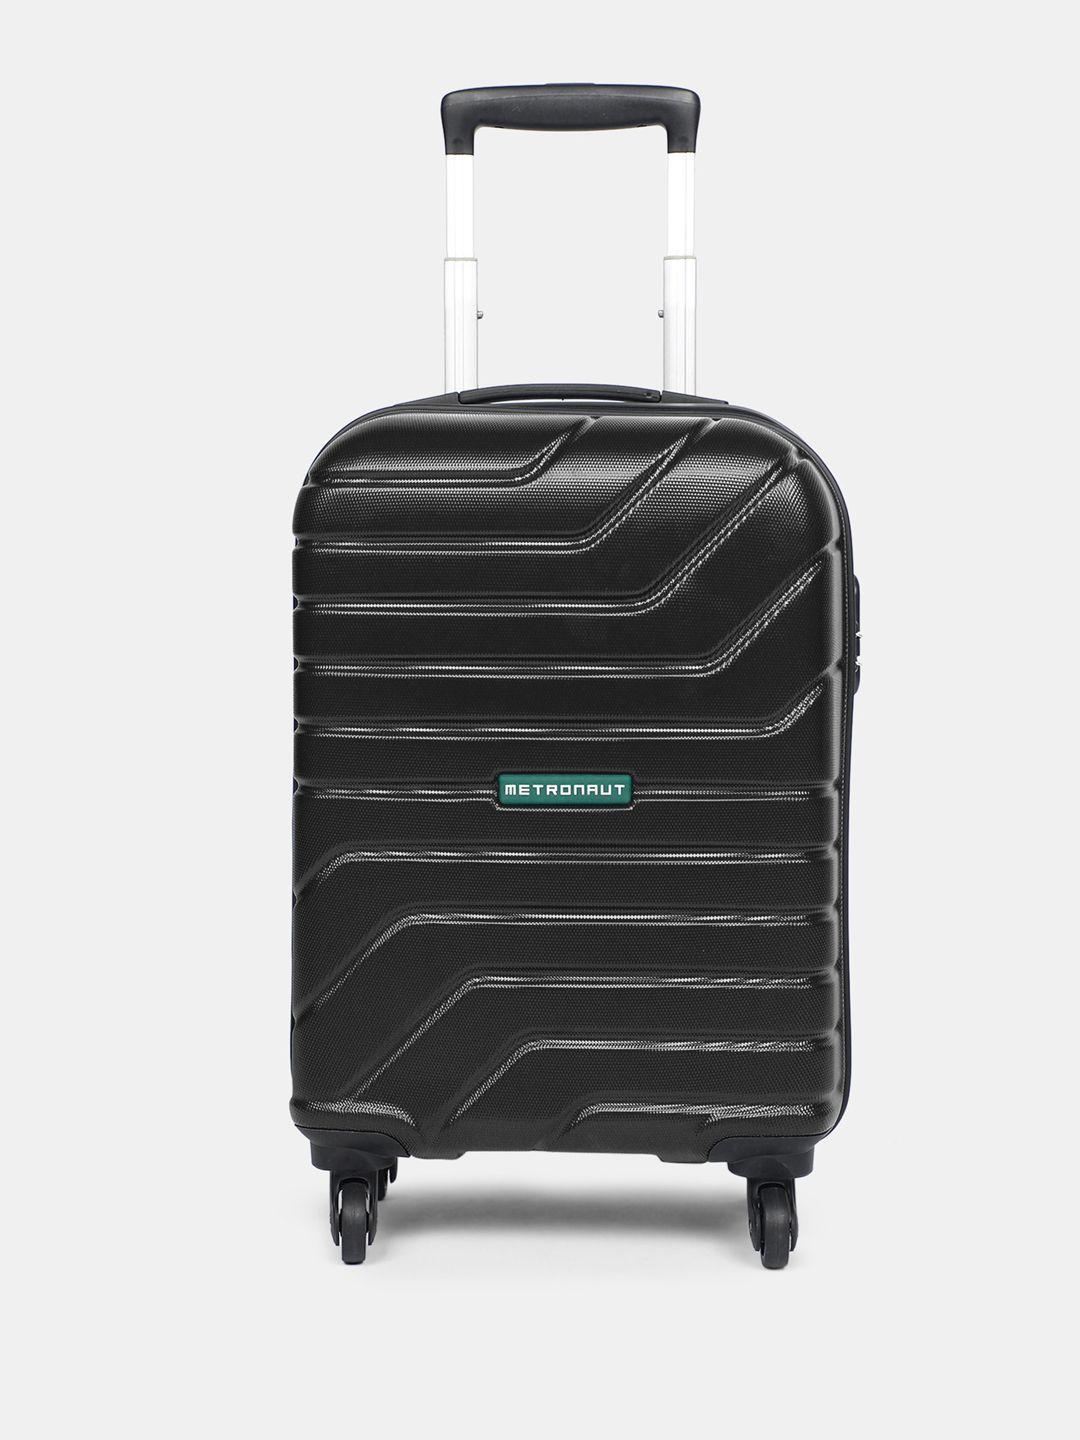 metronaut cabin trolley suitcase